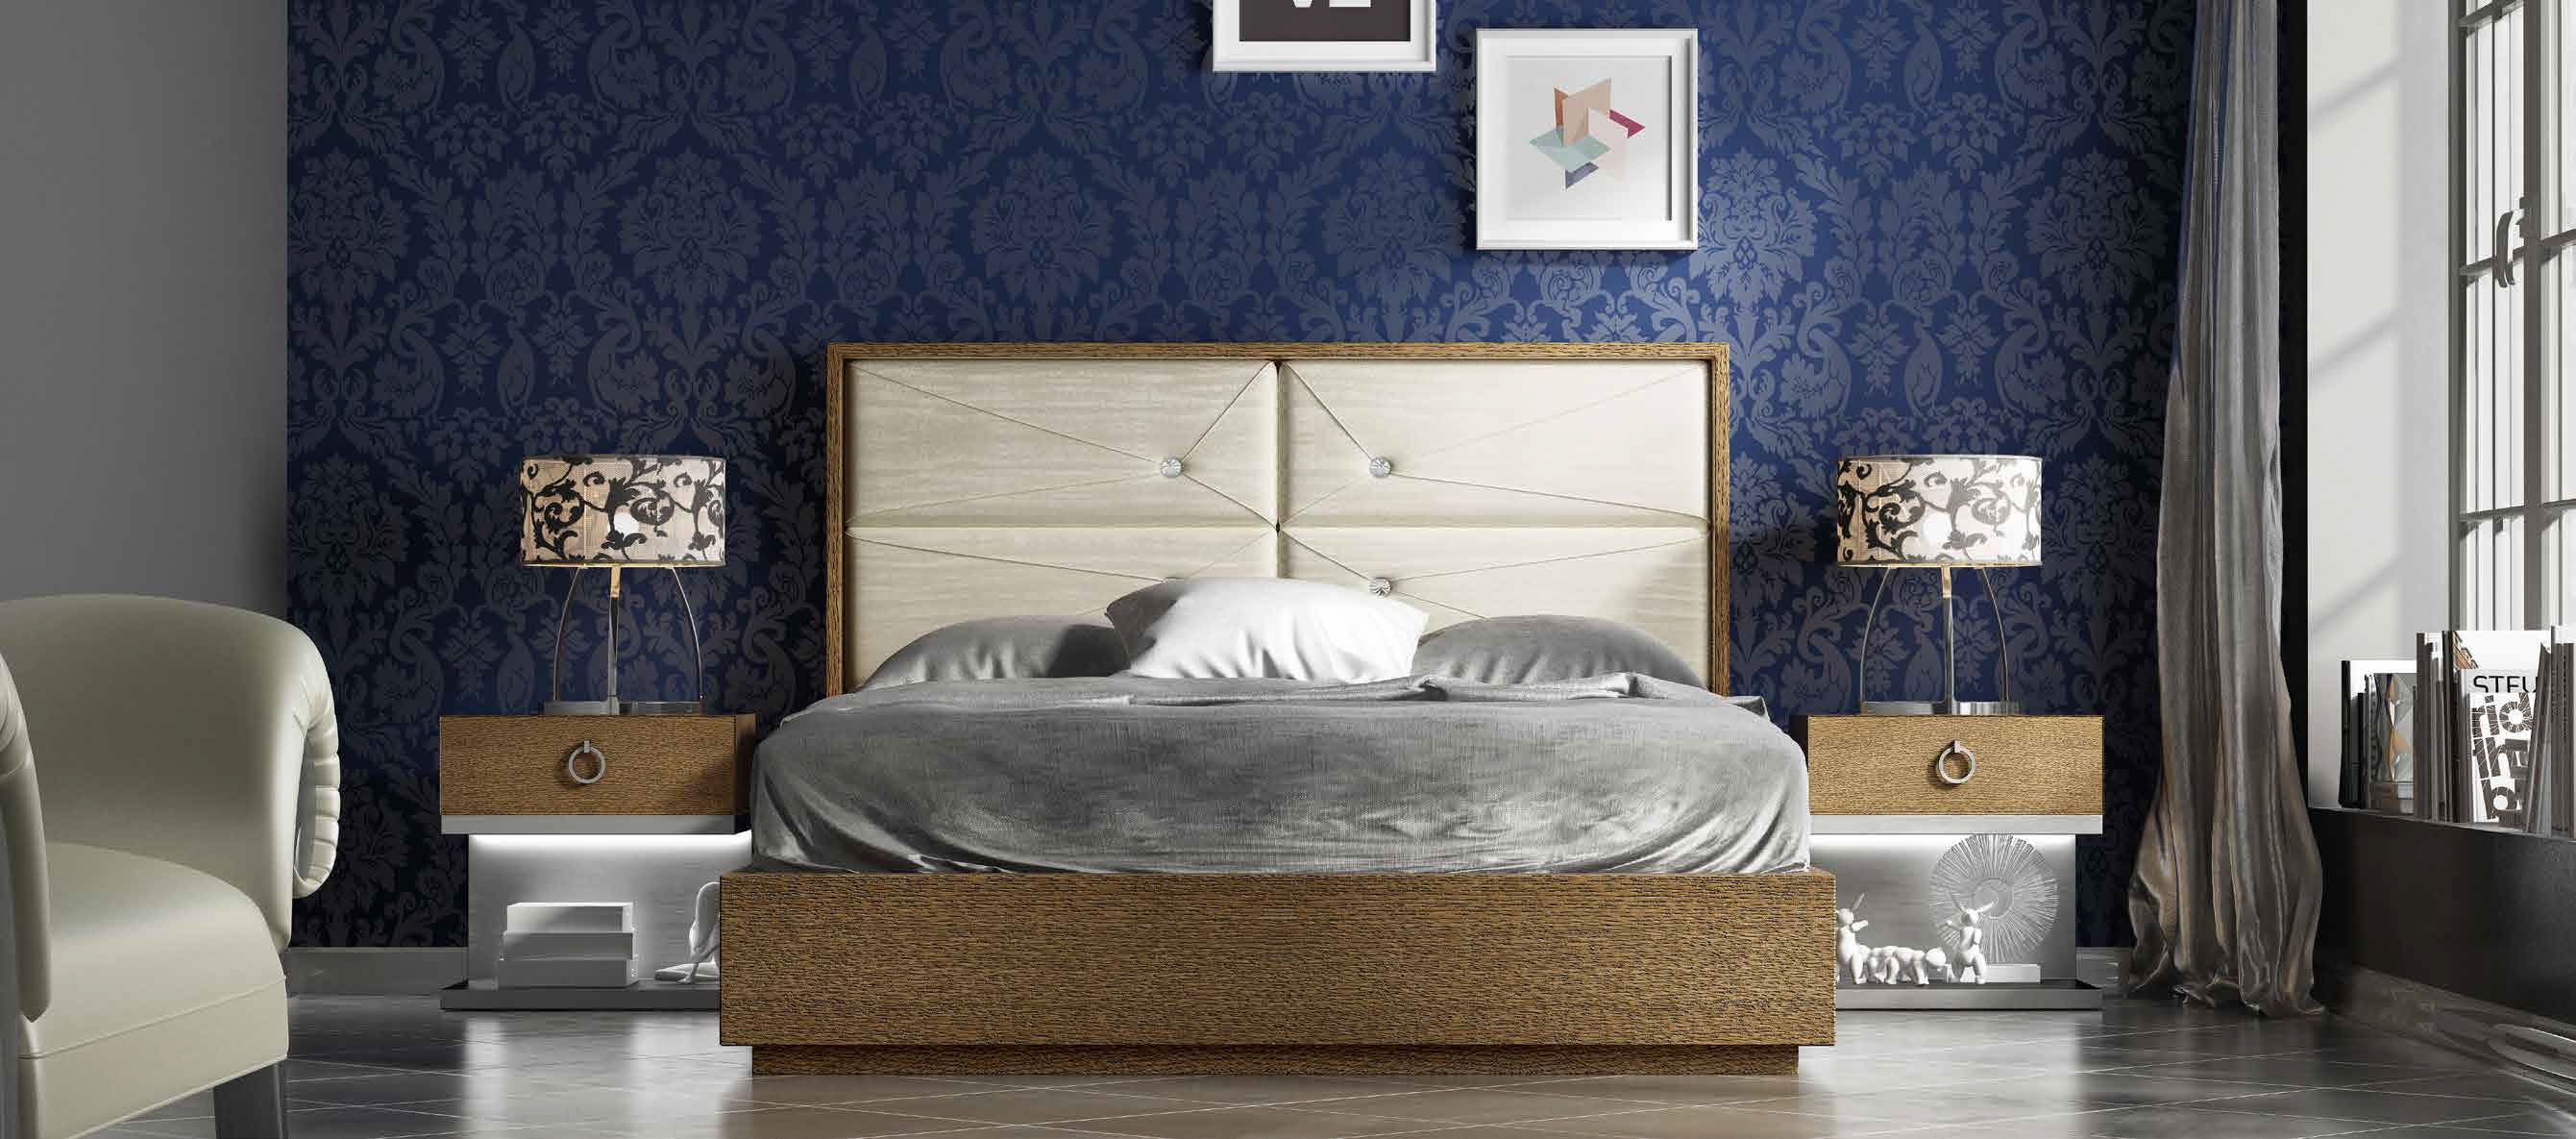 Brands Franco Furniture Bedrooms vol3, Spain DOR 39